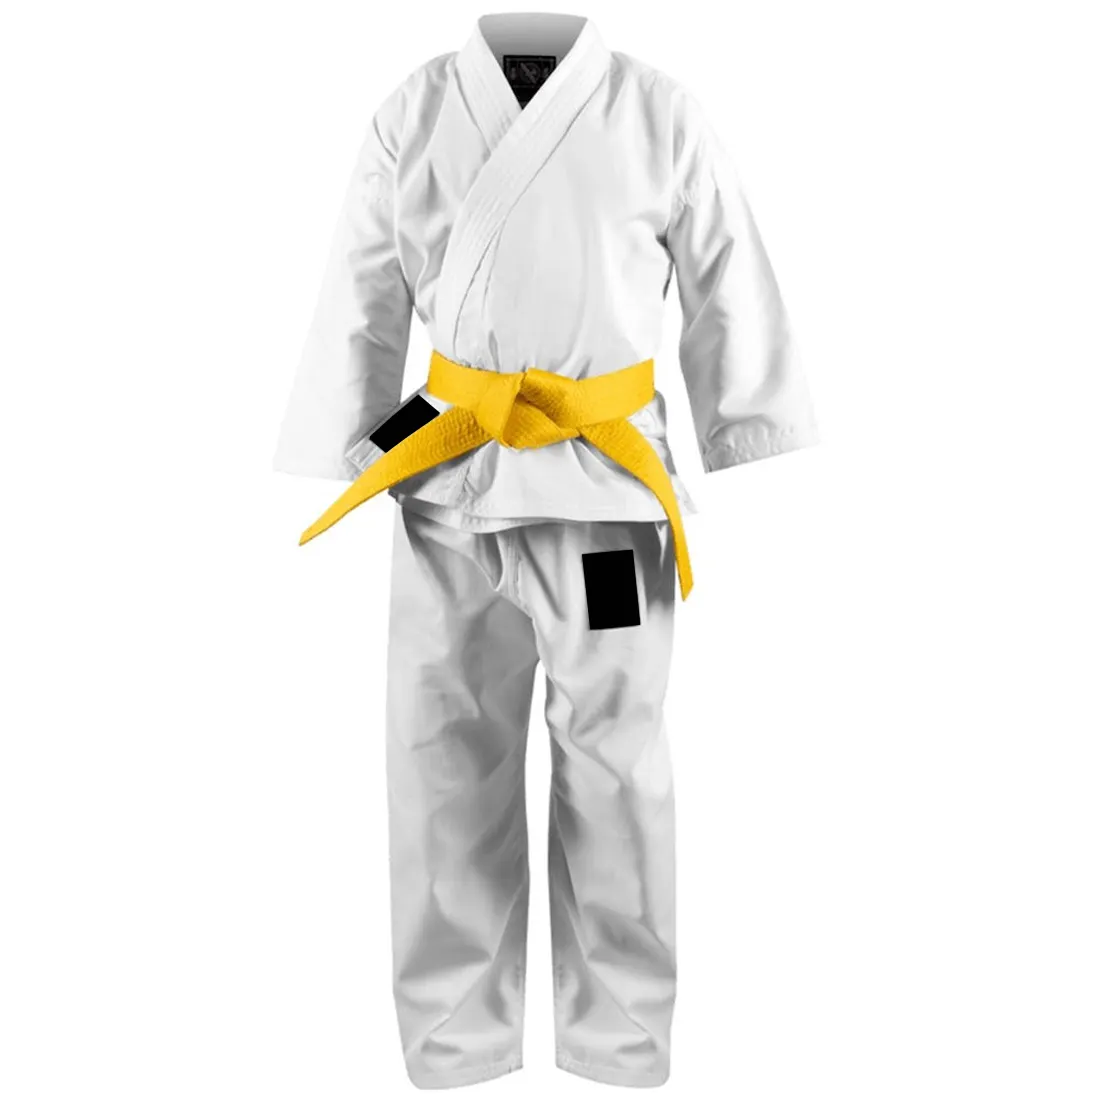 Top Selling Pakistan Manufacturer men Karate judo suit uniform high quality Martial Arts Karate Uniform